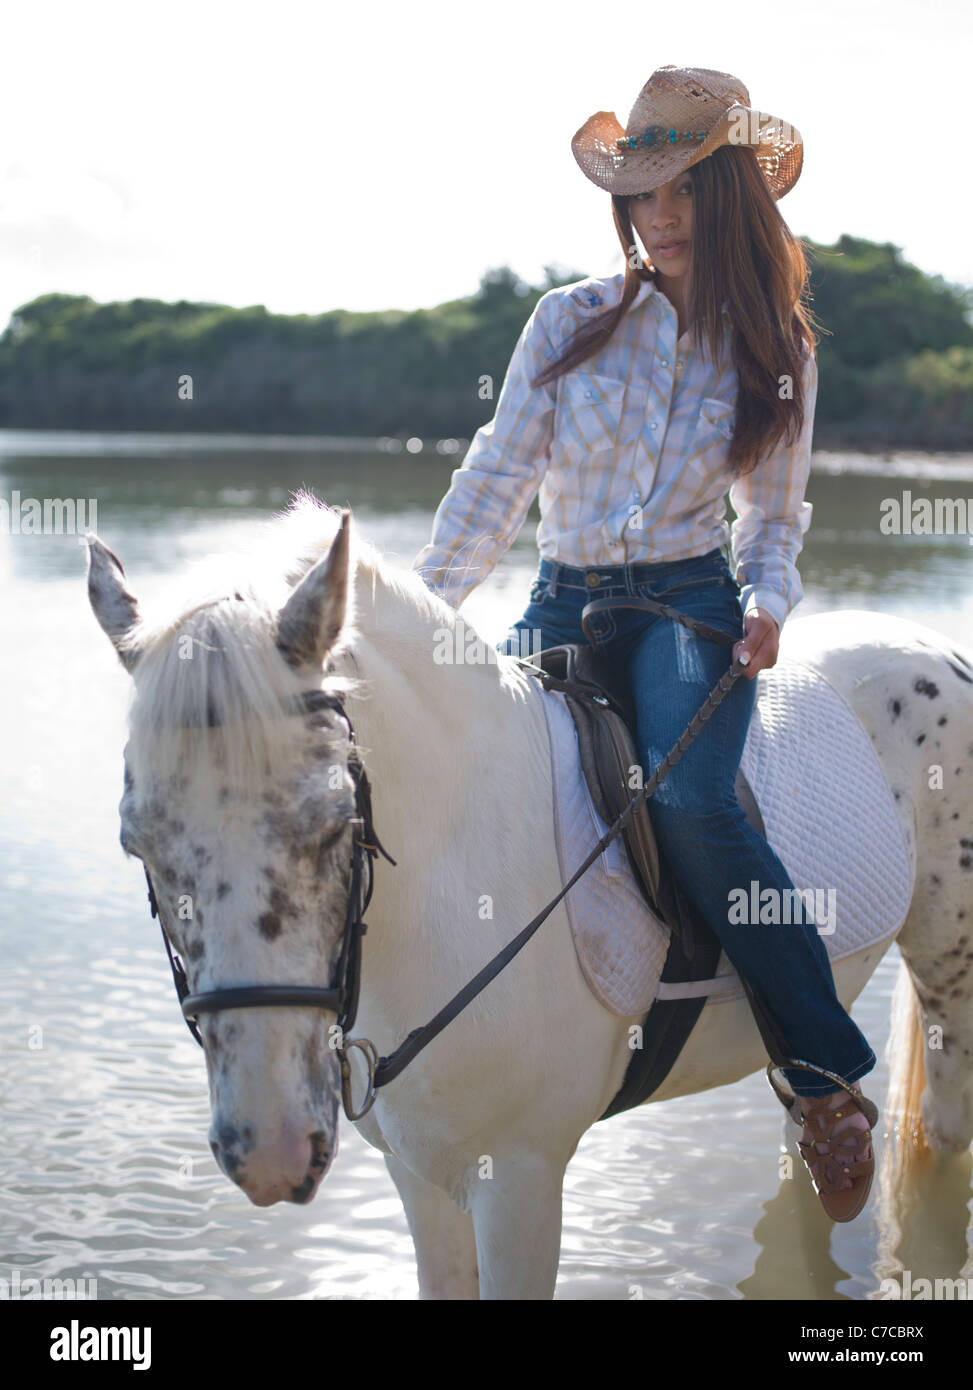 Cowgirl on horseback on beach Stock Photo